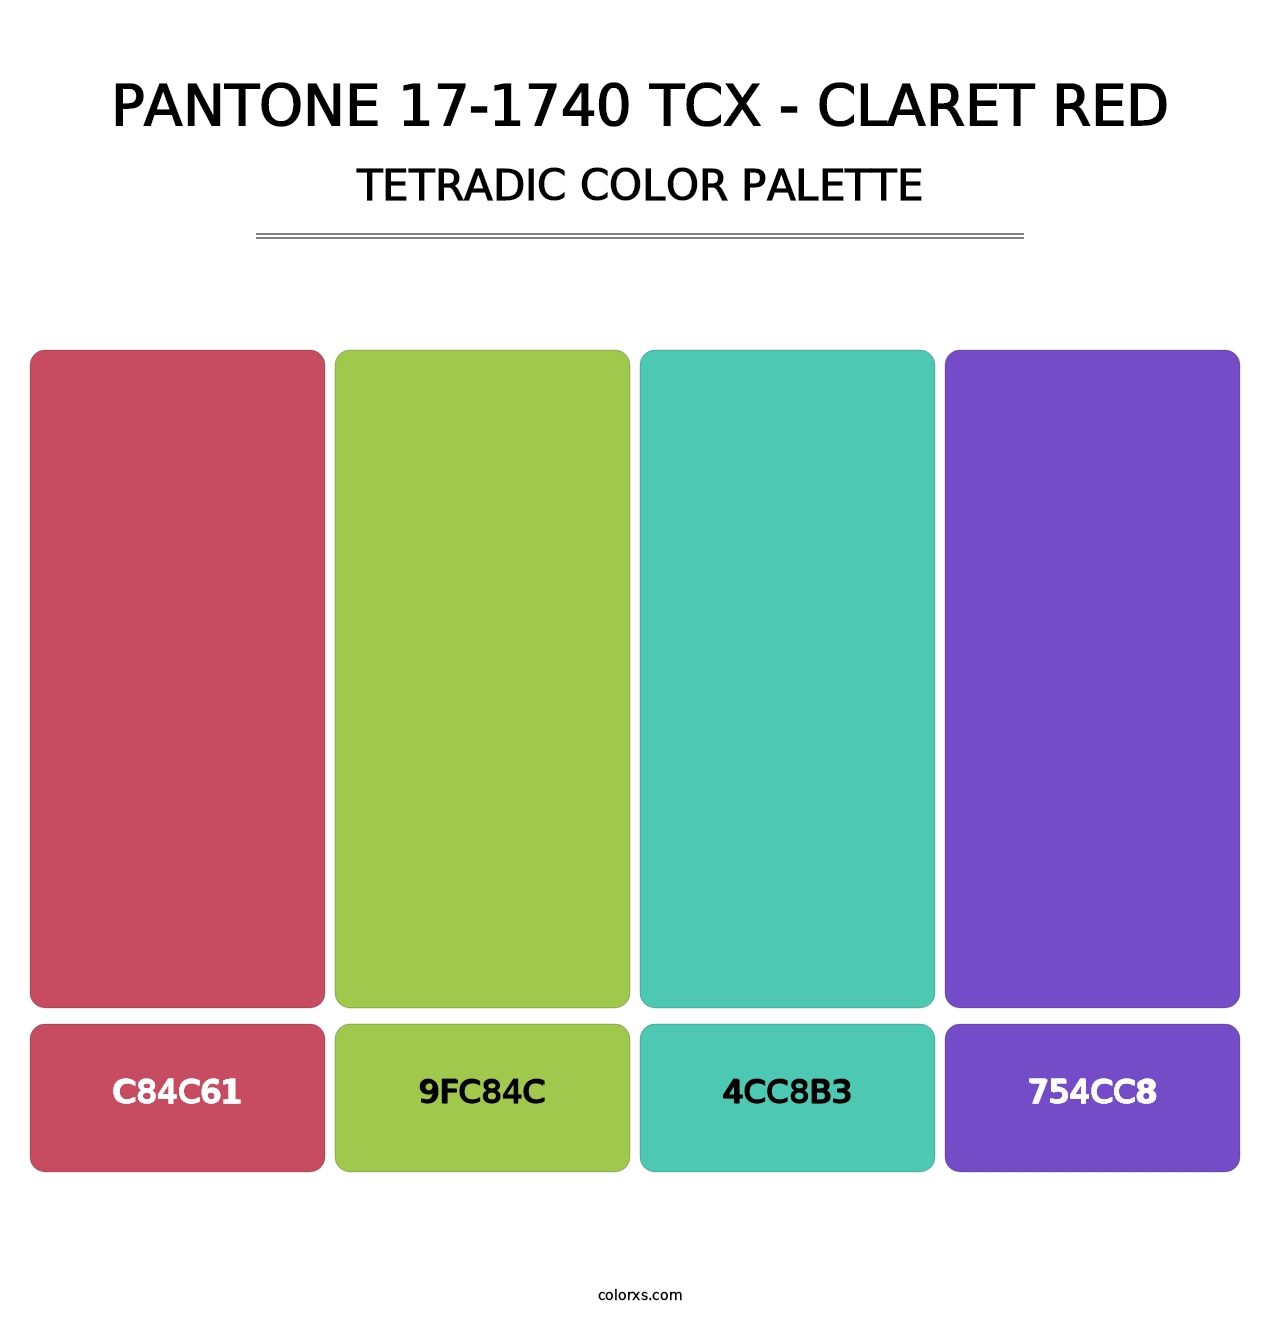 PANTONE 17-1740 TCX - Claret Red - Tetradic Color Palette